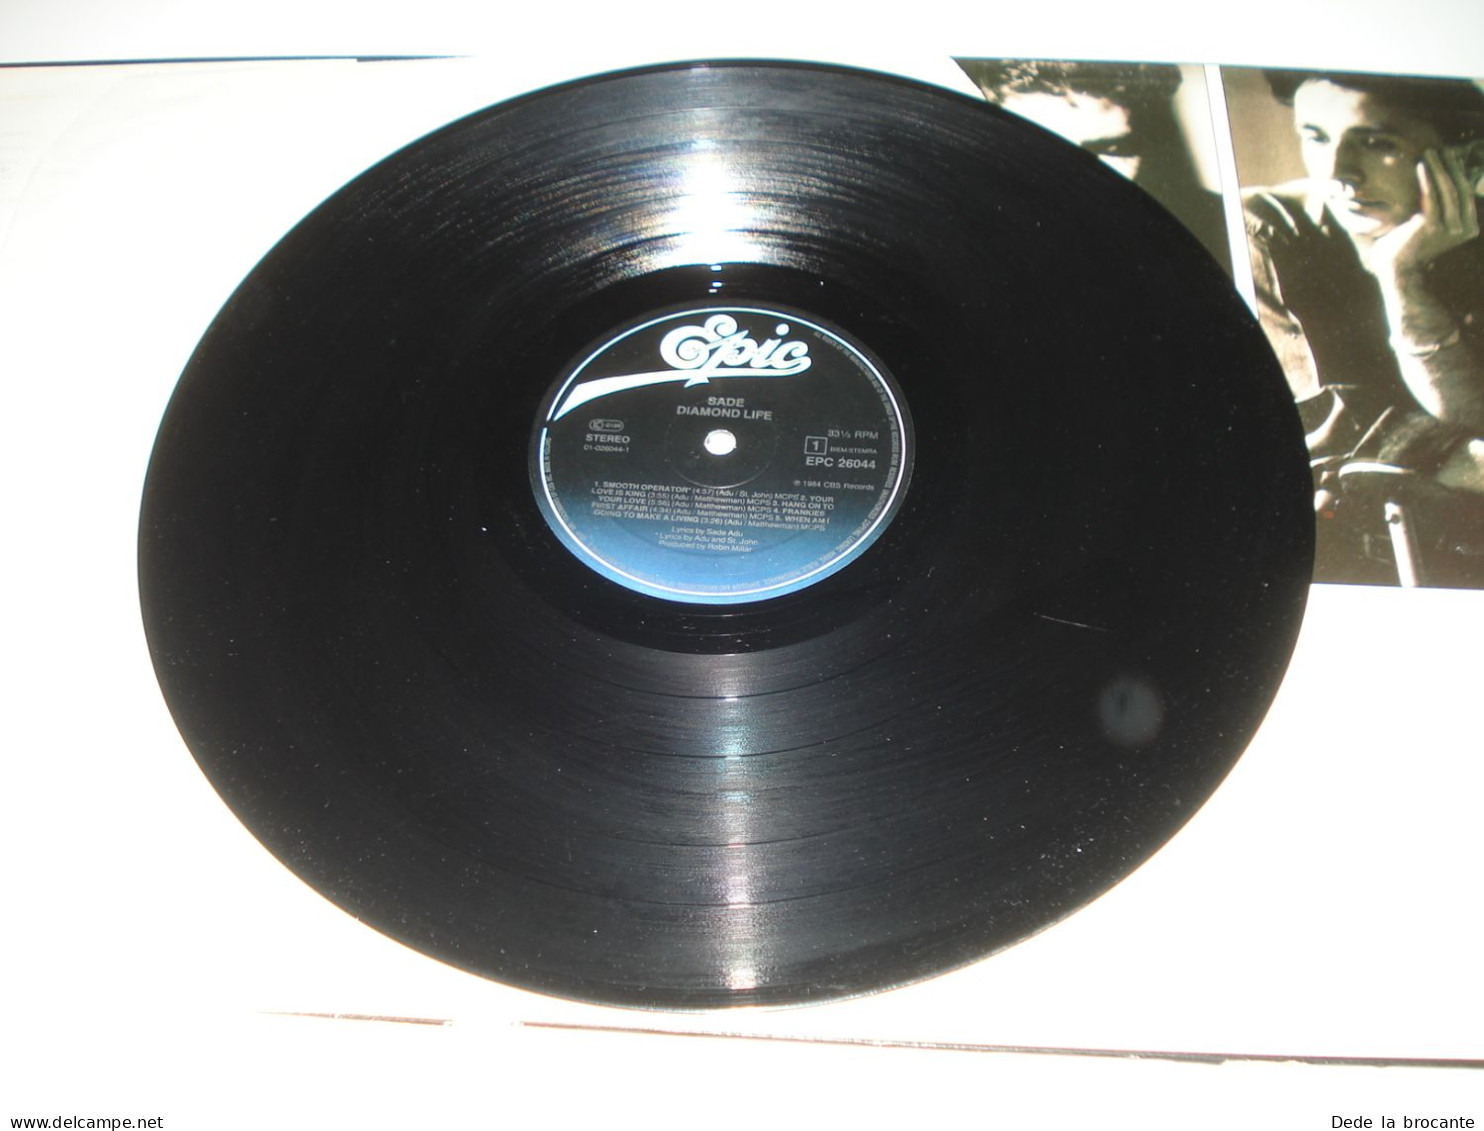 B5 / Sade " Diamond Live " - LP - EPIC - 26044 - UK 1984 -  VG/VG++ - Reggae